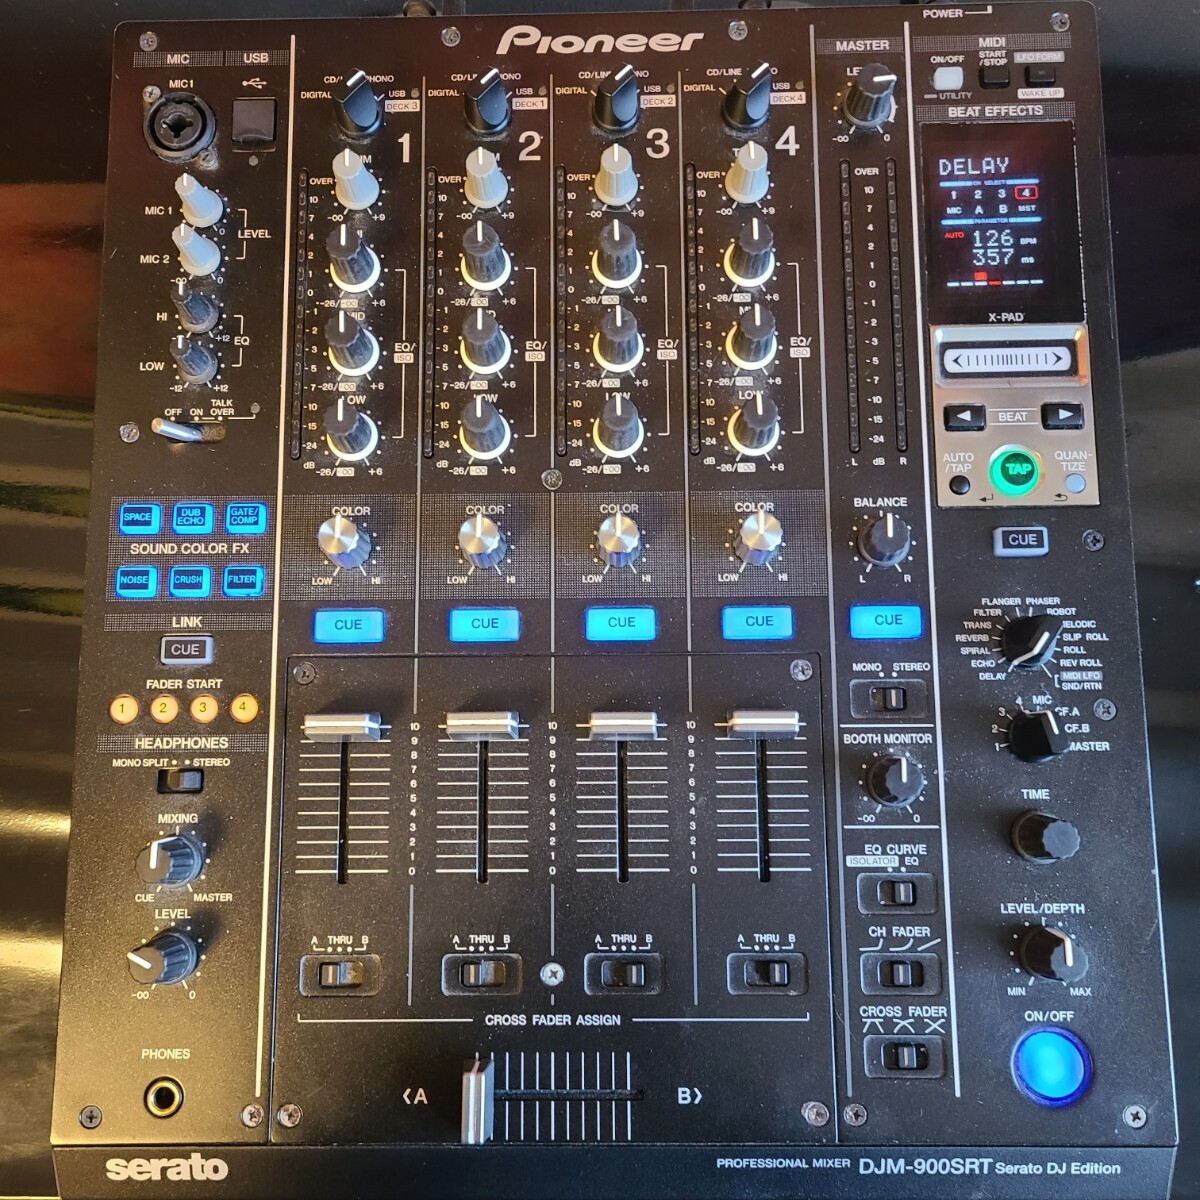  снят с производства DJM-900 SRT Serato DJ Edition Pioneer DJ Mixer миксер 2015 год производства Pioneer DJ